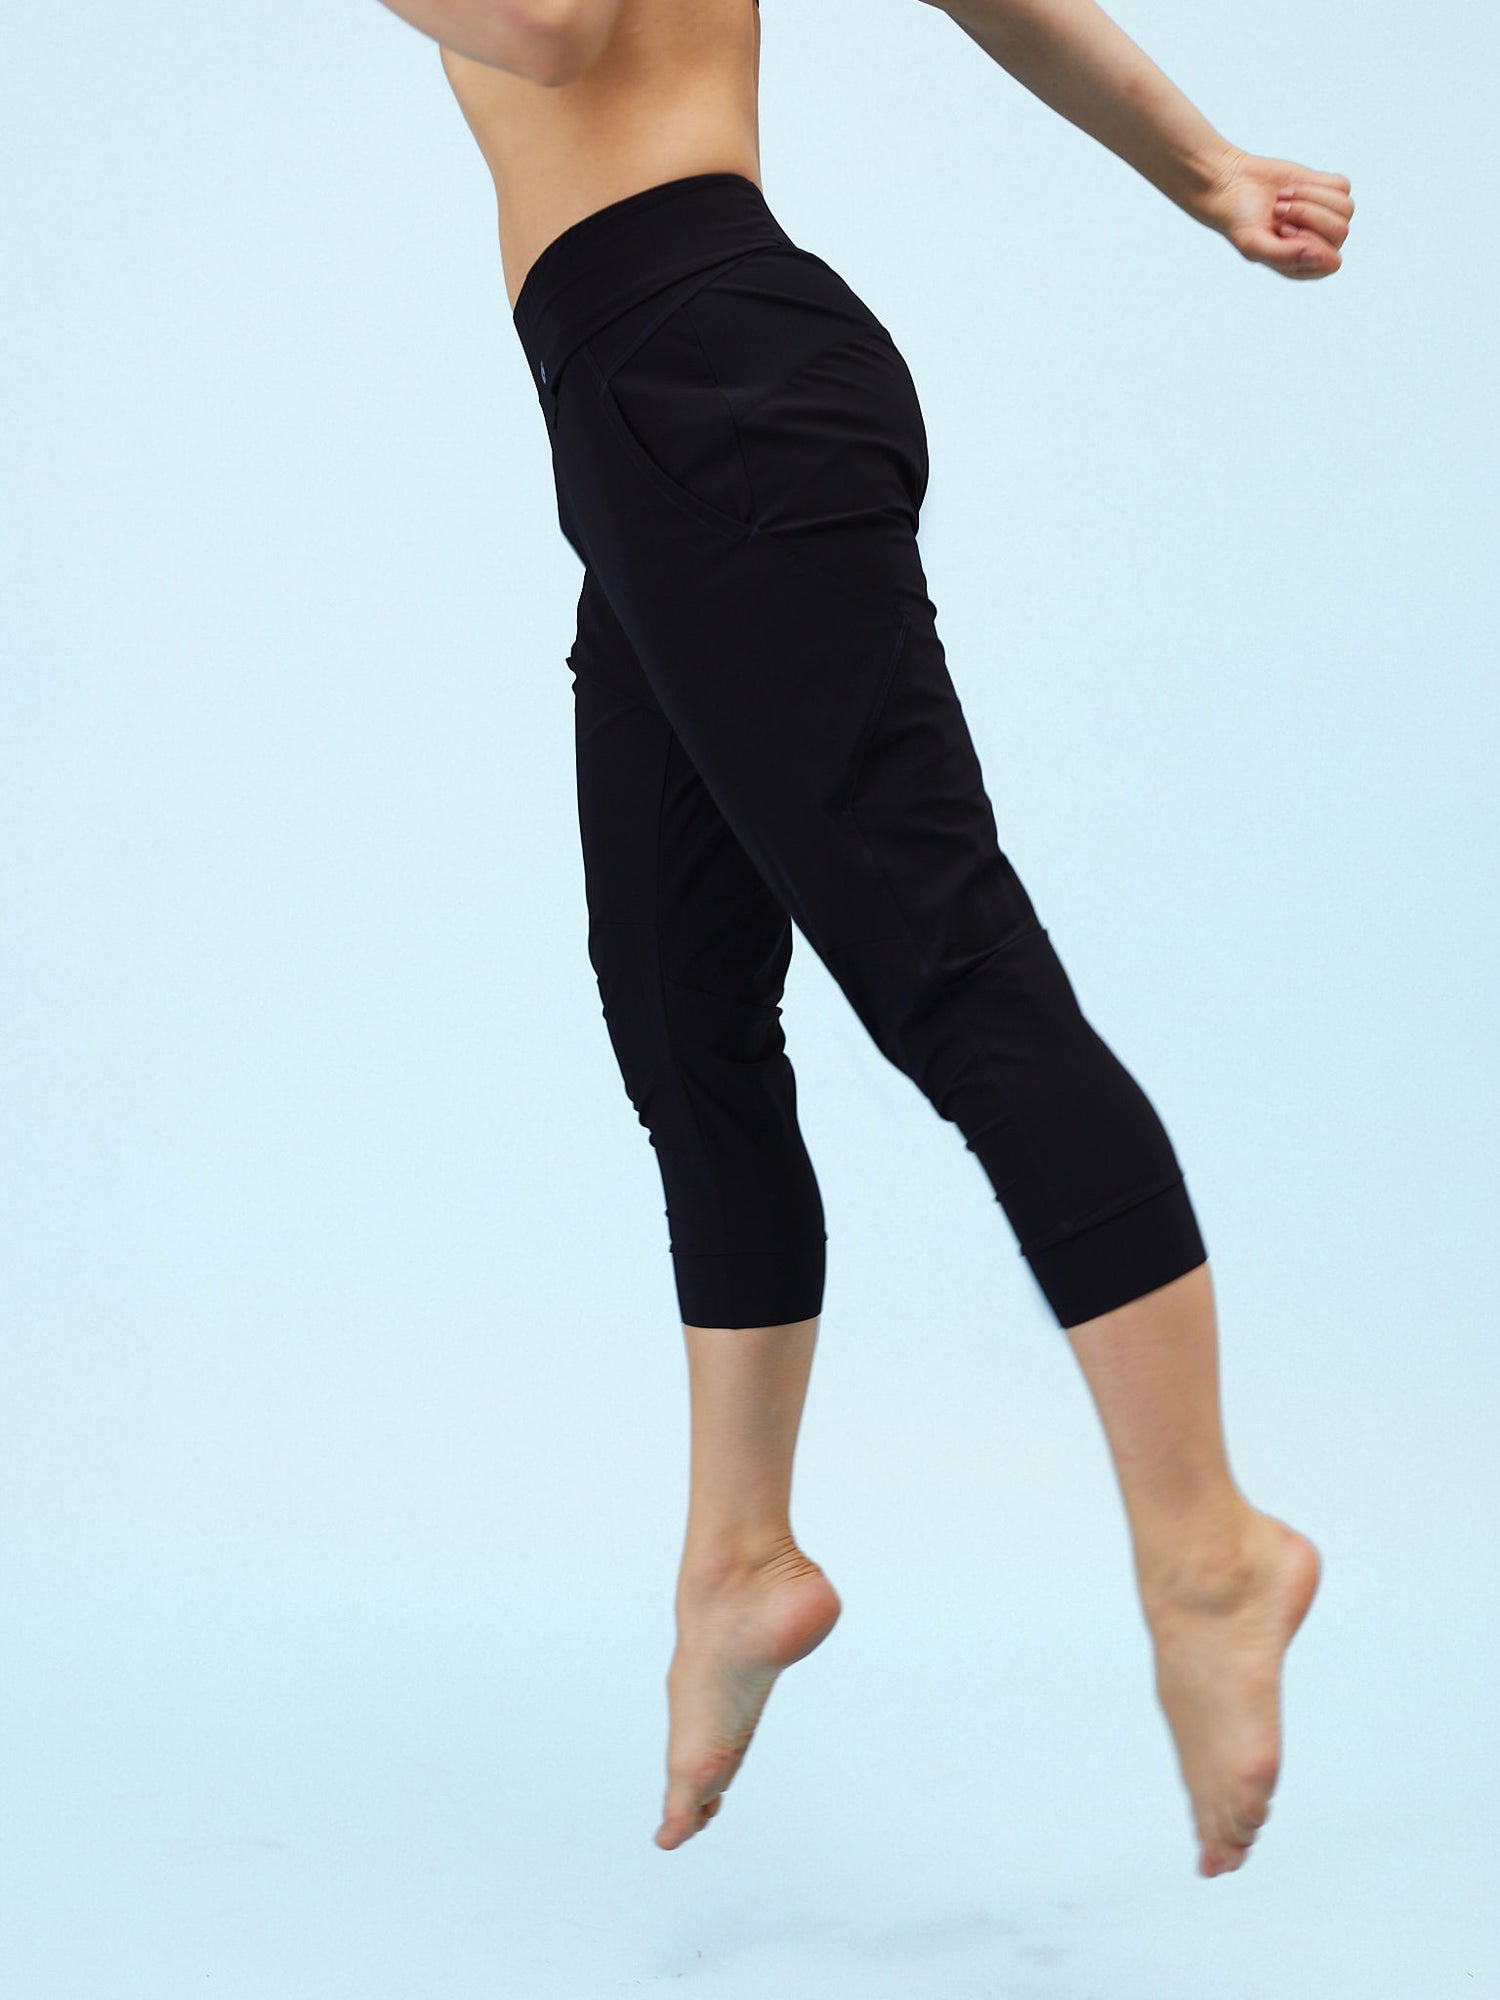 Sweaty Betty Gary Cropped Yoga Pants, Black at John Lewis & Partners